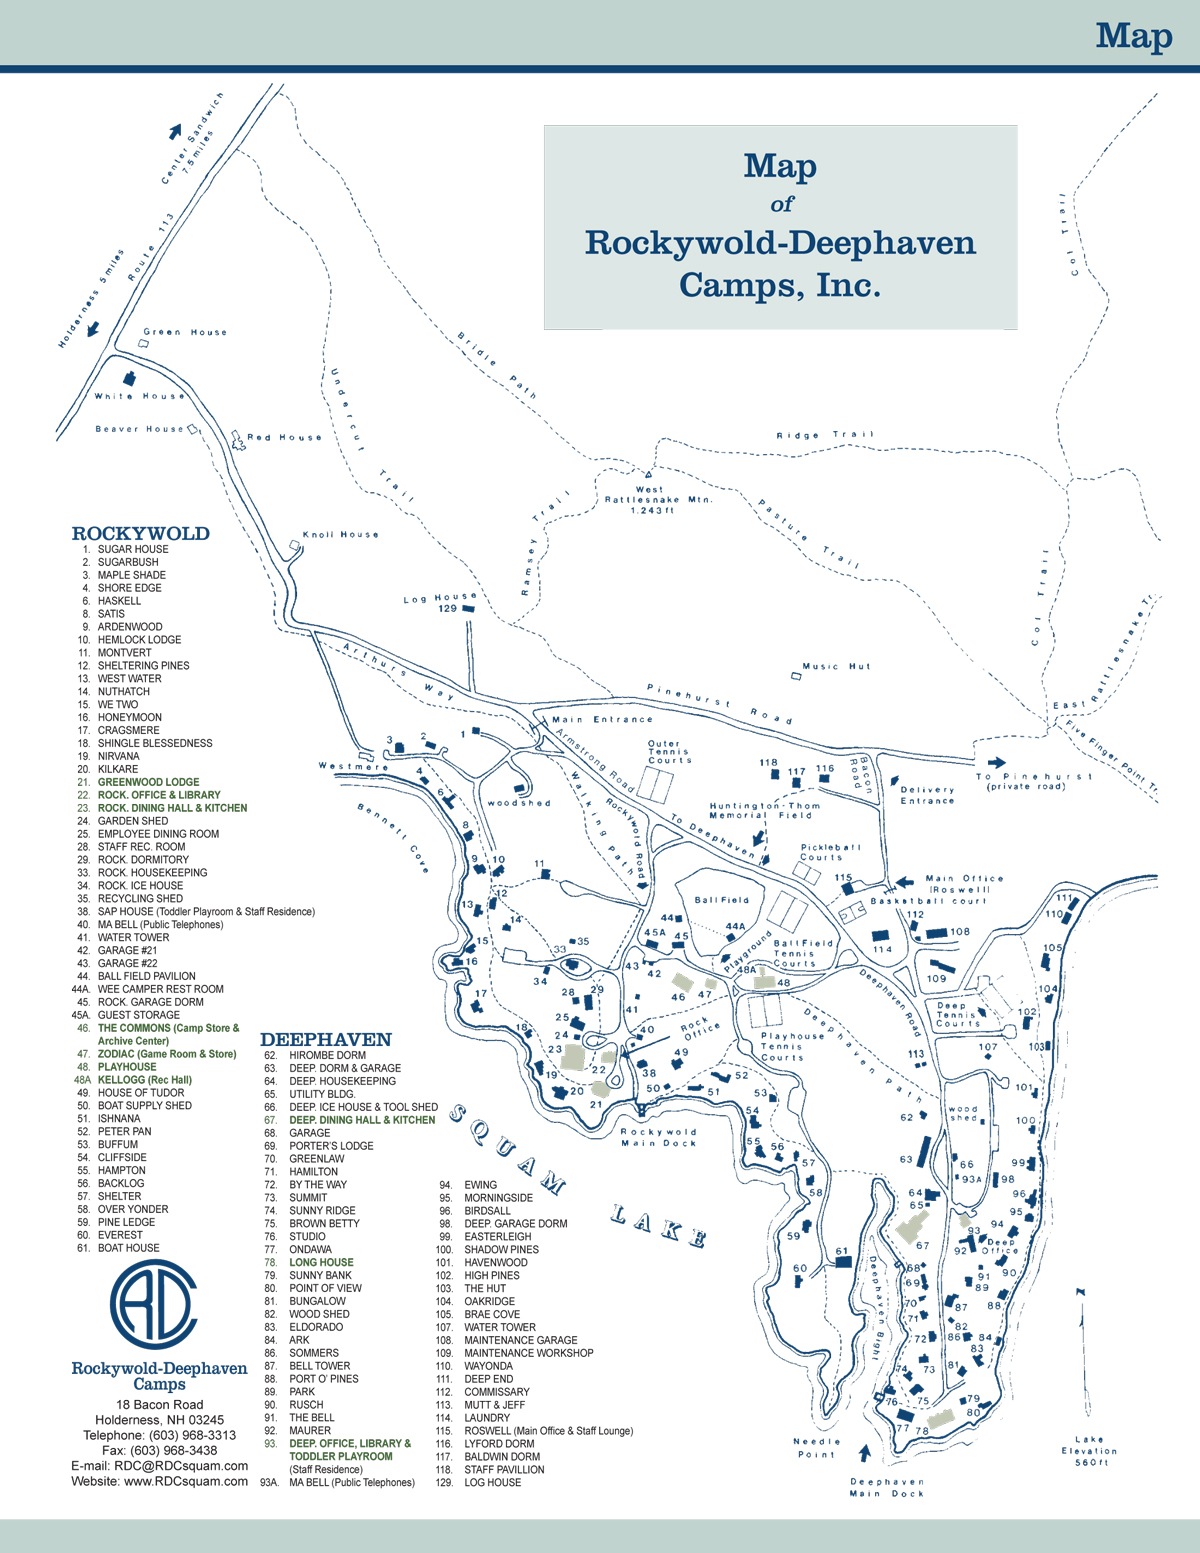 RDC Map & Facilities Information